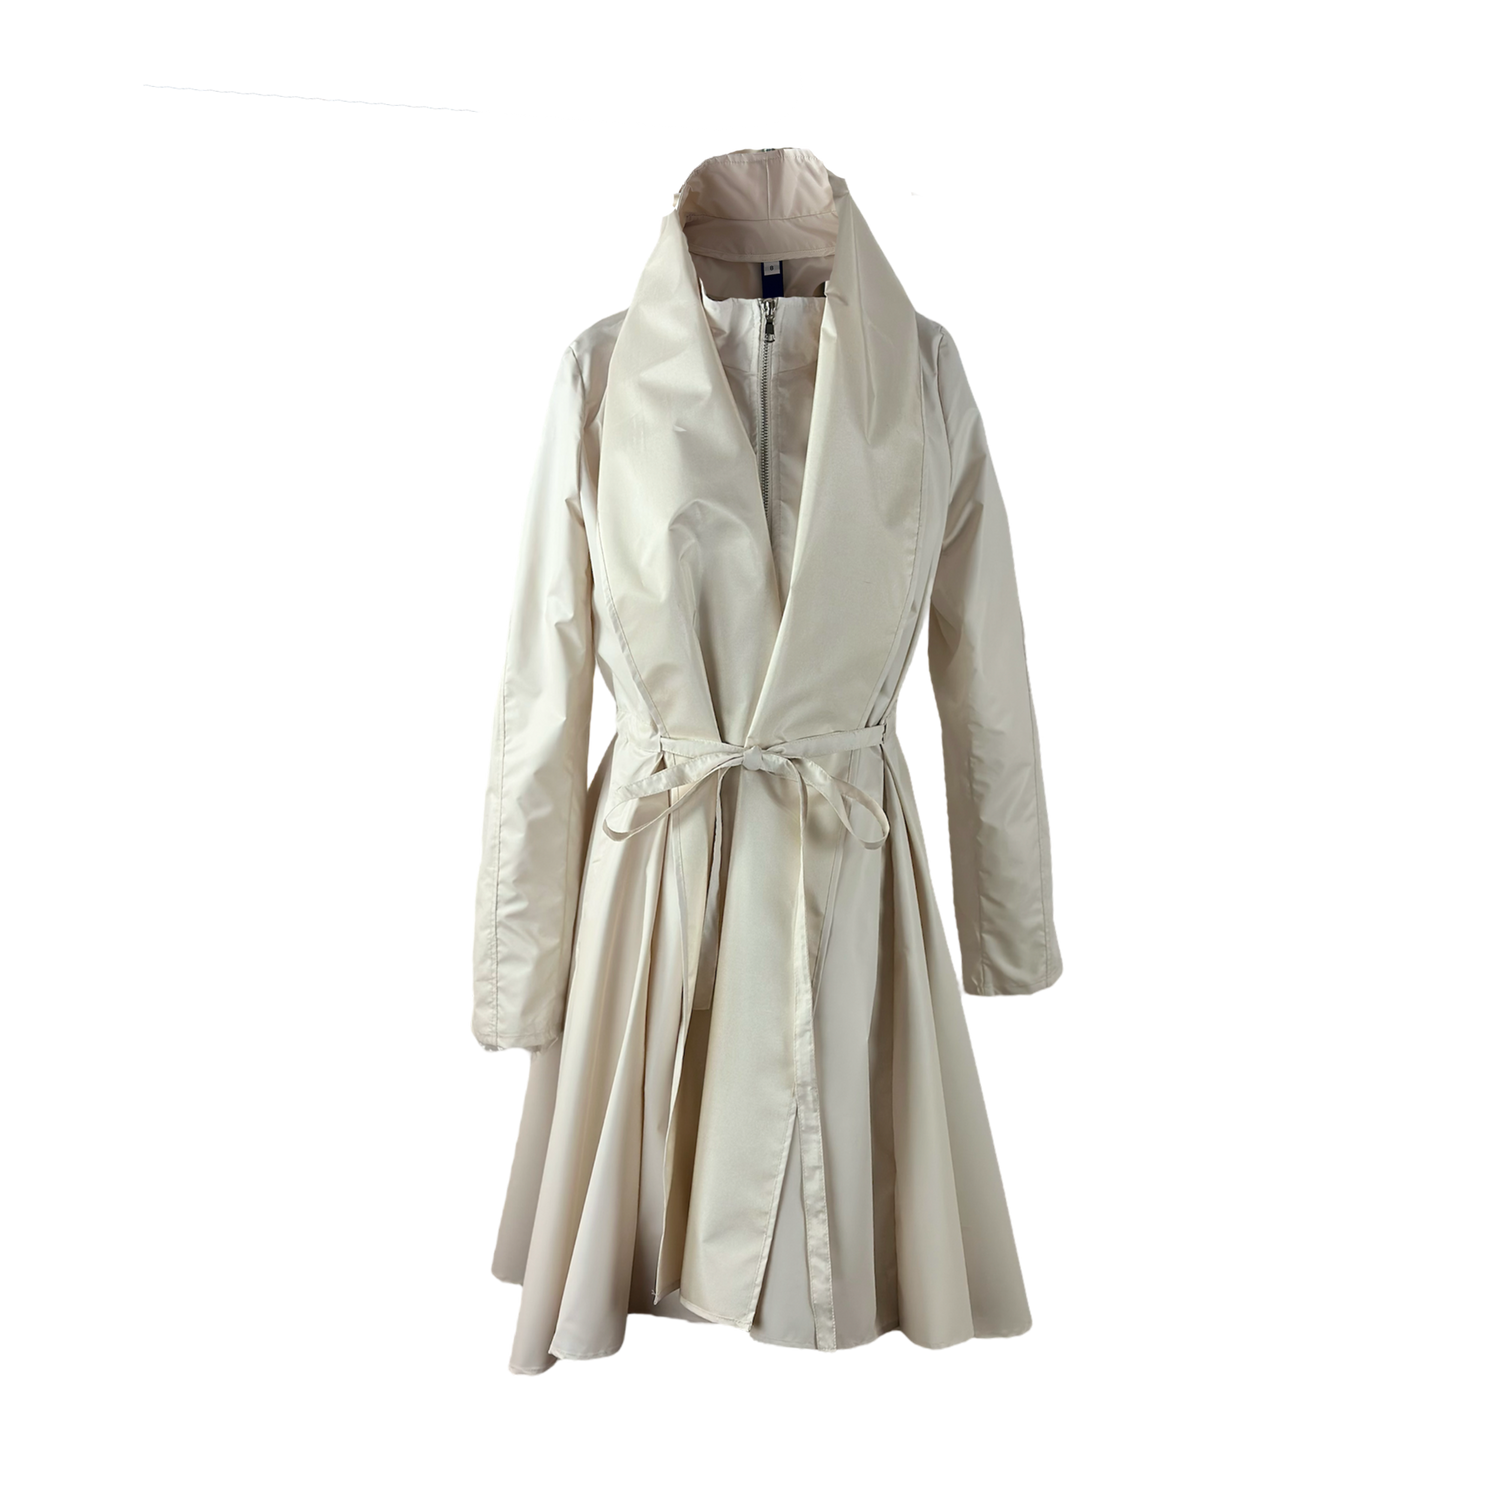 Shiny ecru cotton coat with self tie belt, interior bib and integrated hood